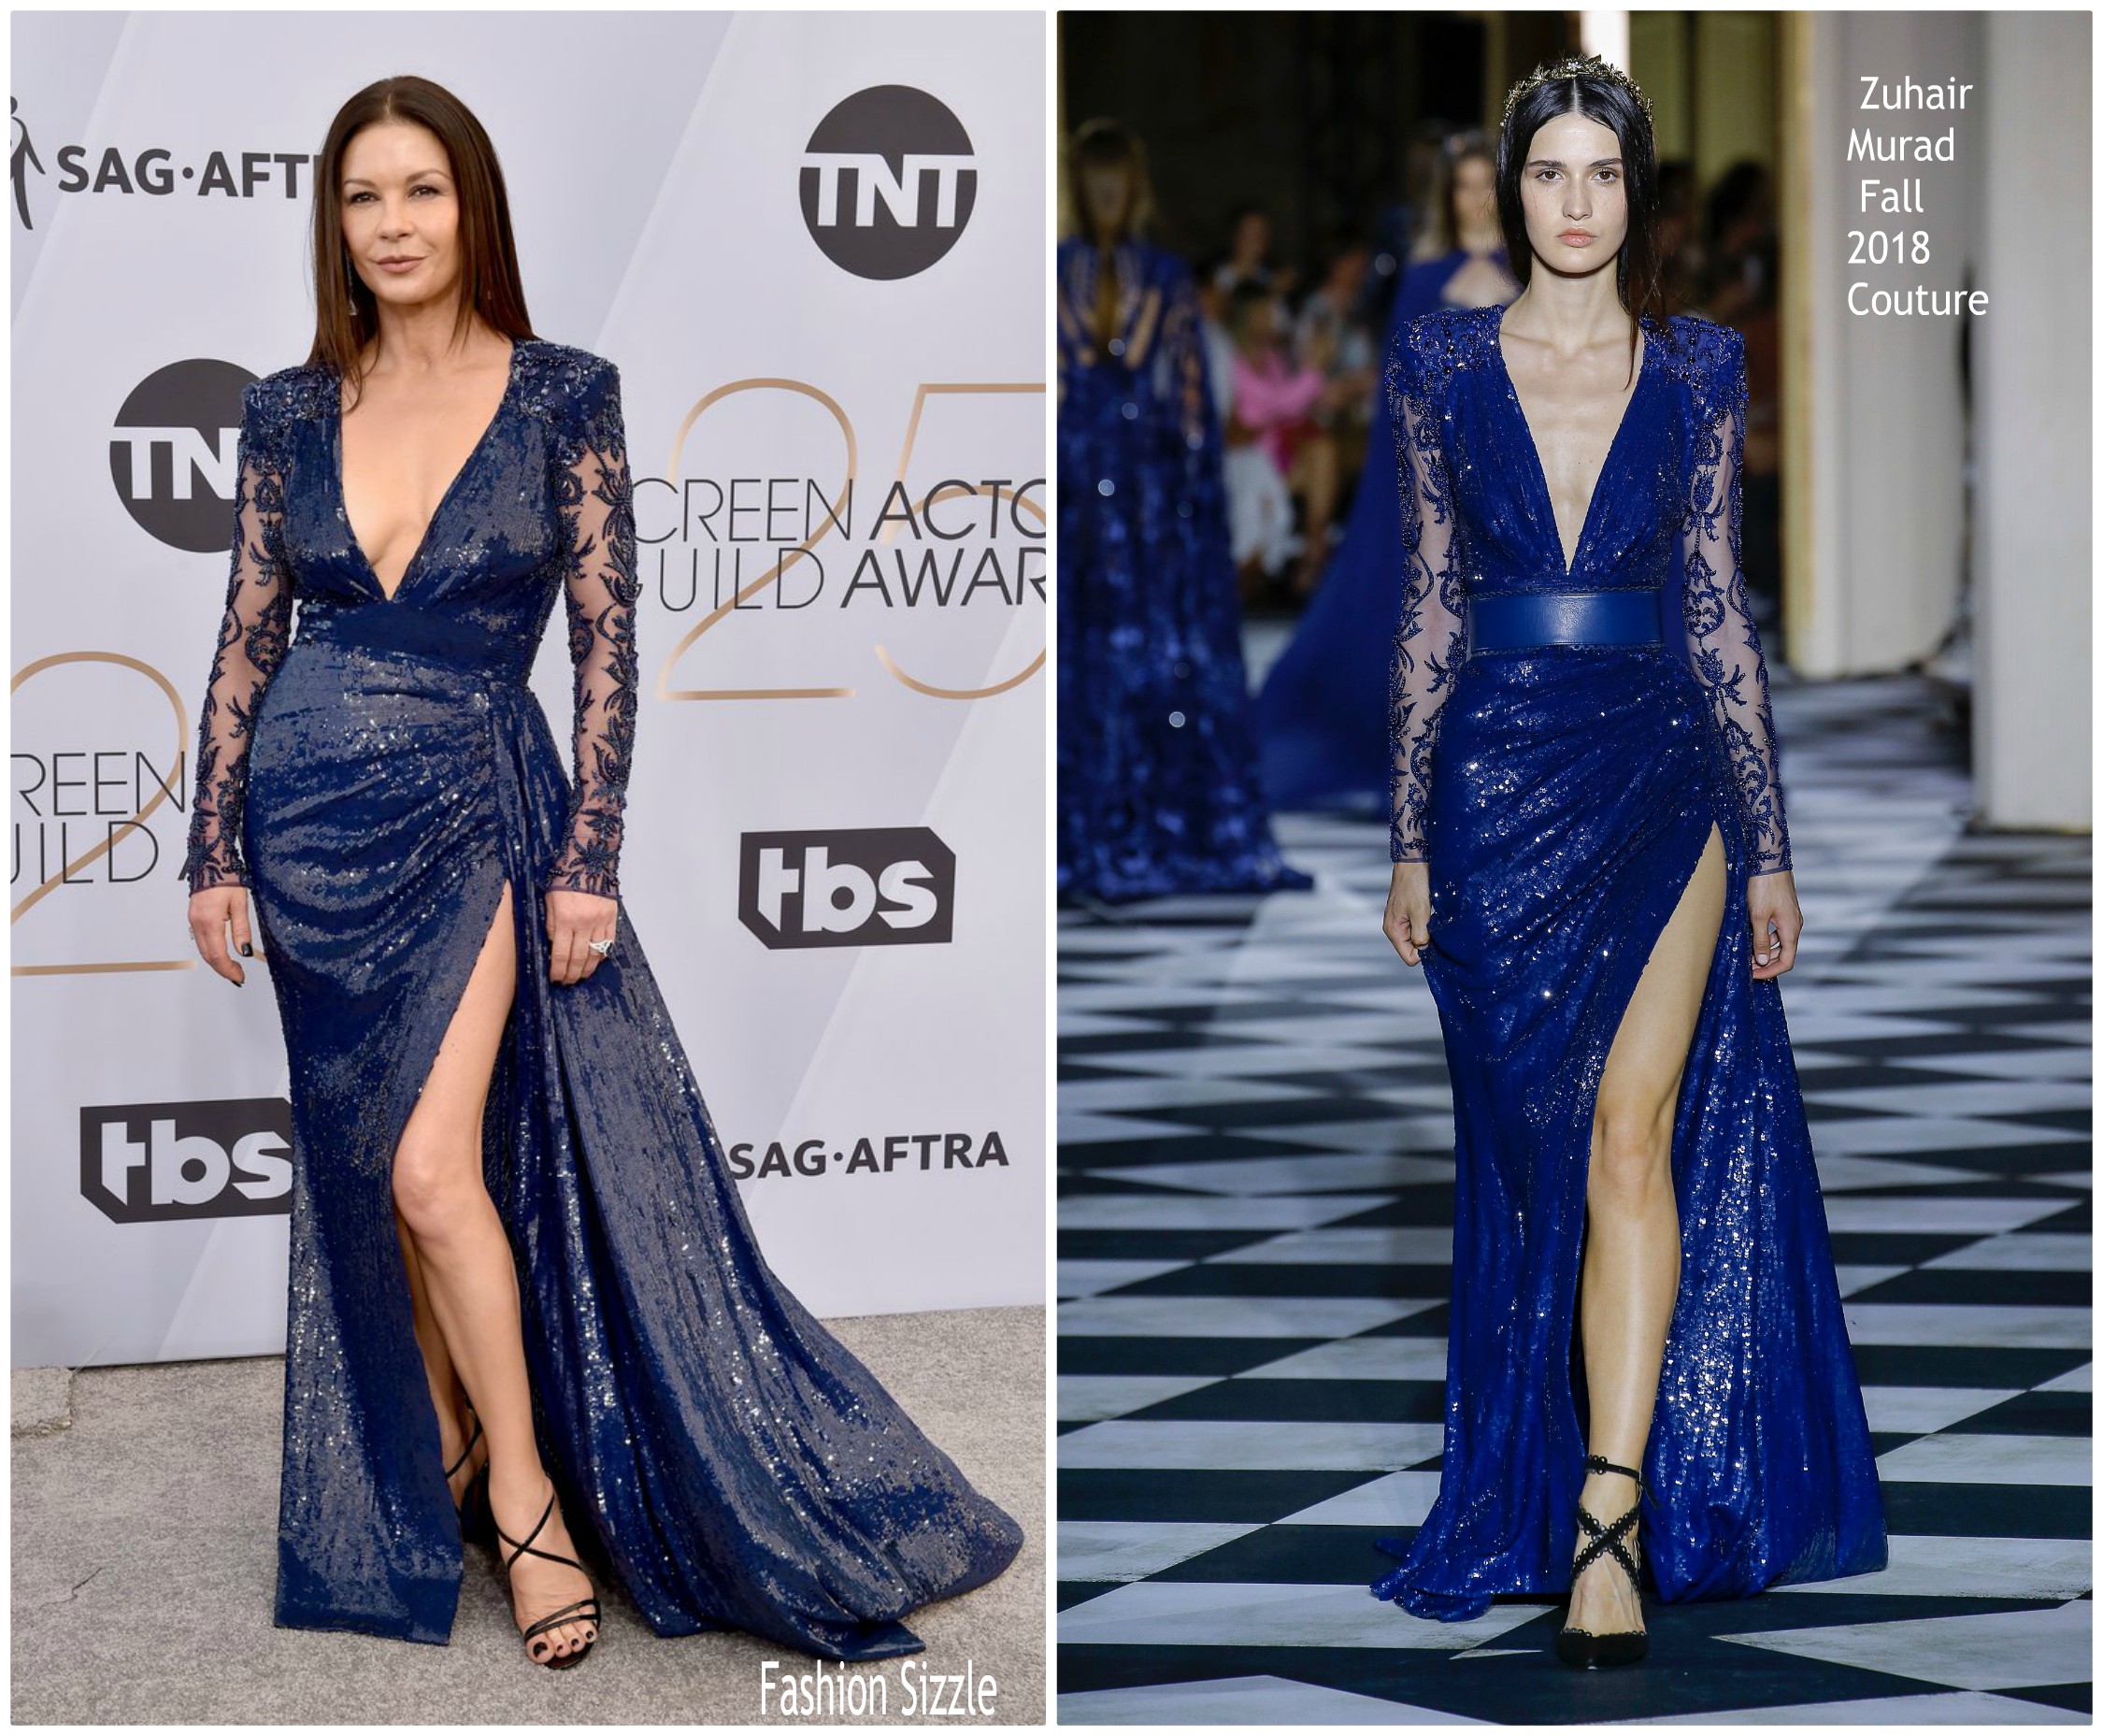 Catherine Zeta-Jones In Zuhair Murad Couture @ 2019 SAG Awards